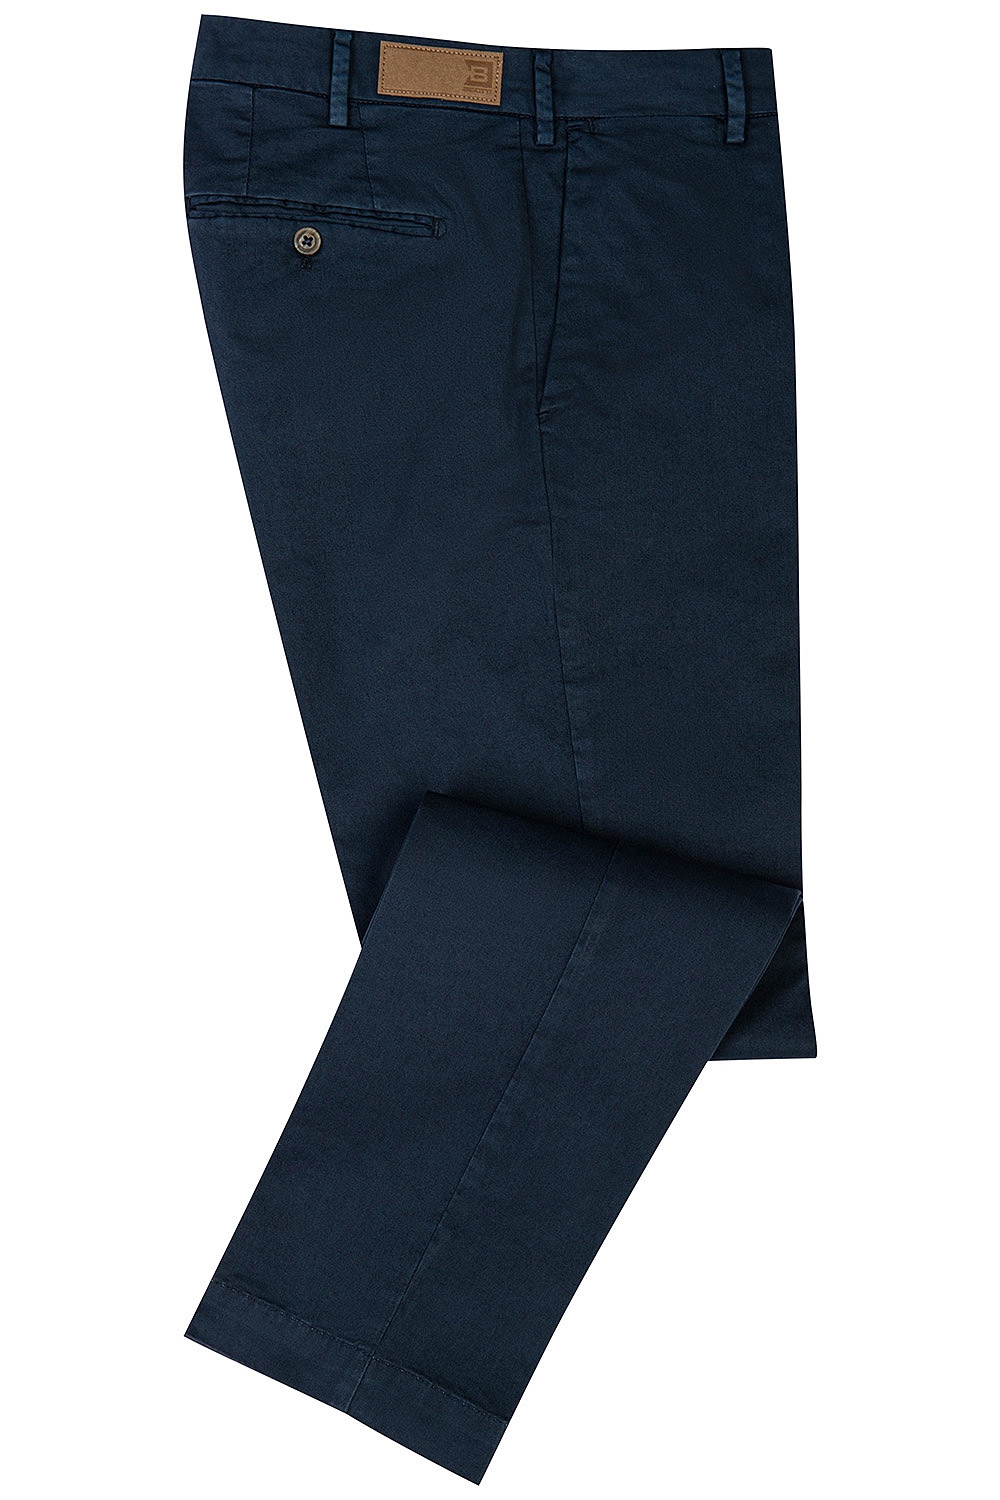 Pantaloni Regular Bleumarin Uni 0